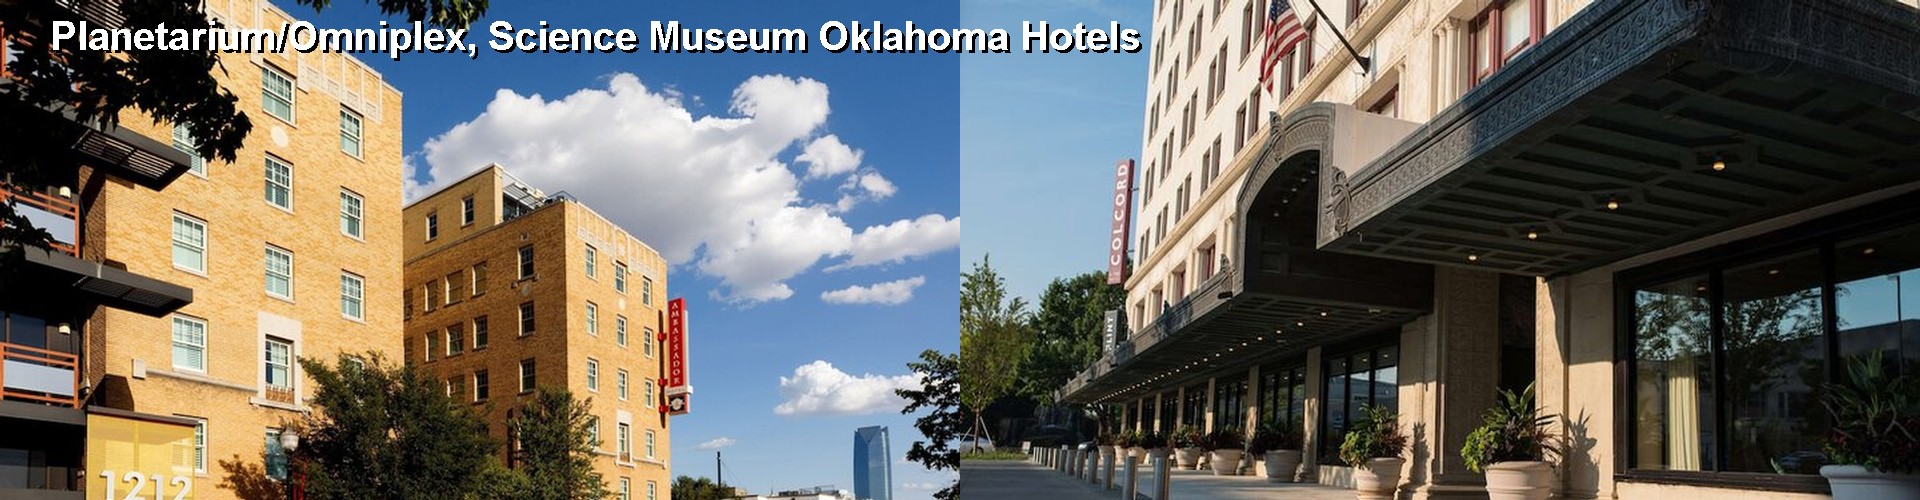 5 Best Hotels near Planetarium/Omniplex, Science Museum Oklahoma